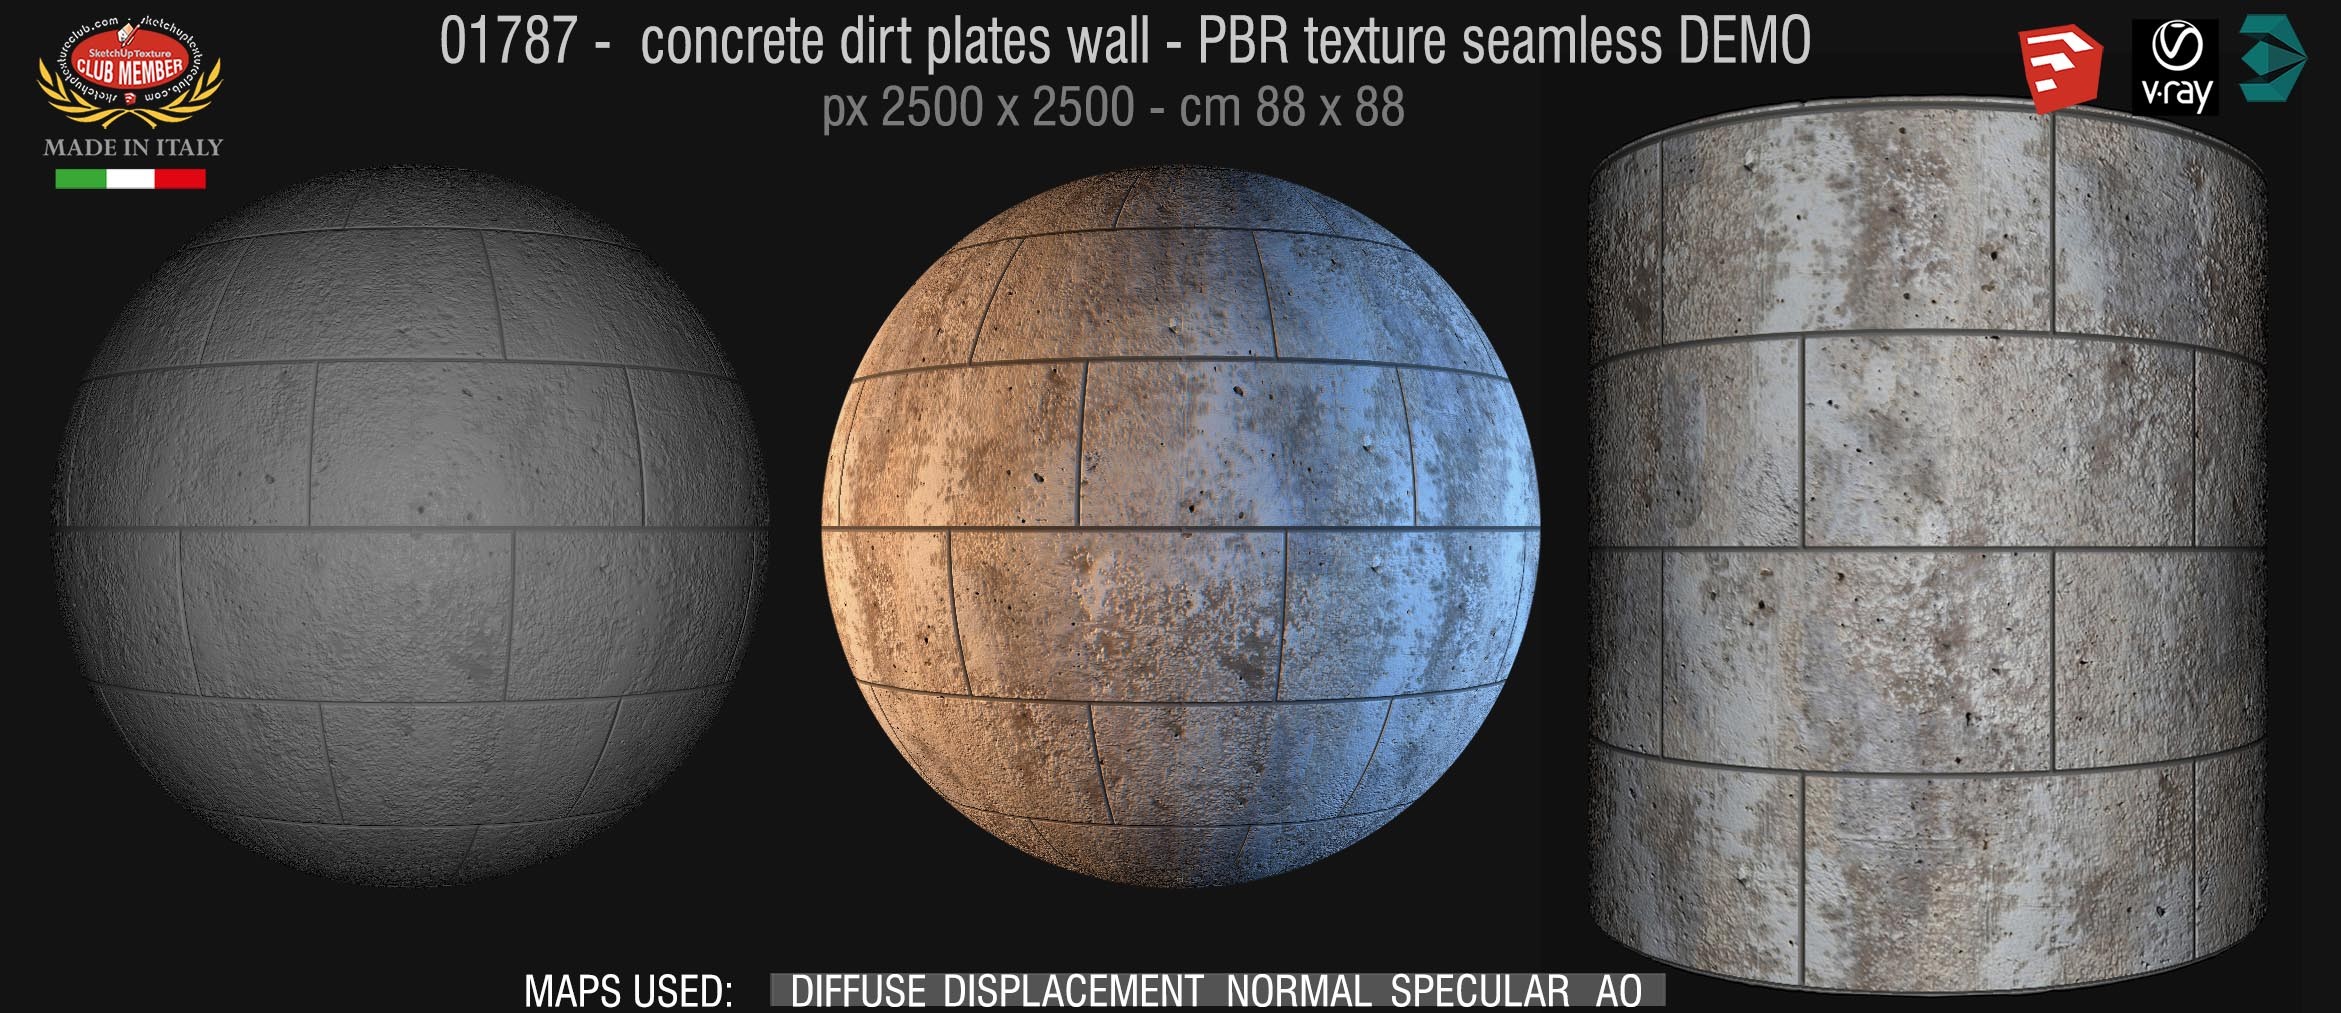 01787 concrete dirt plates wall PBR texture seamless DEMO